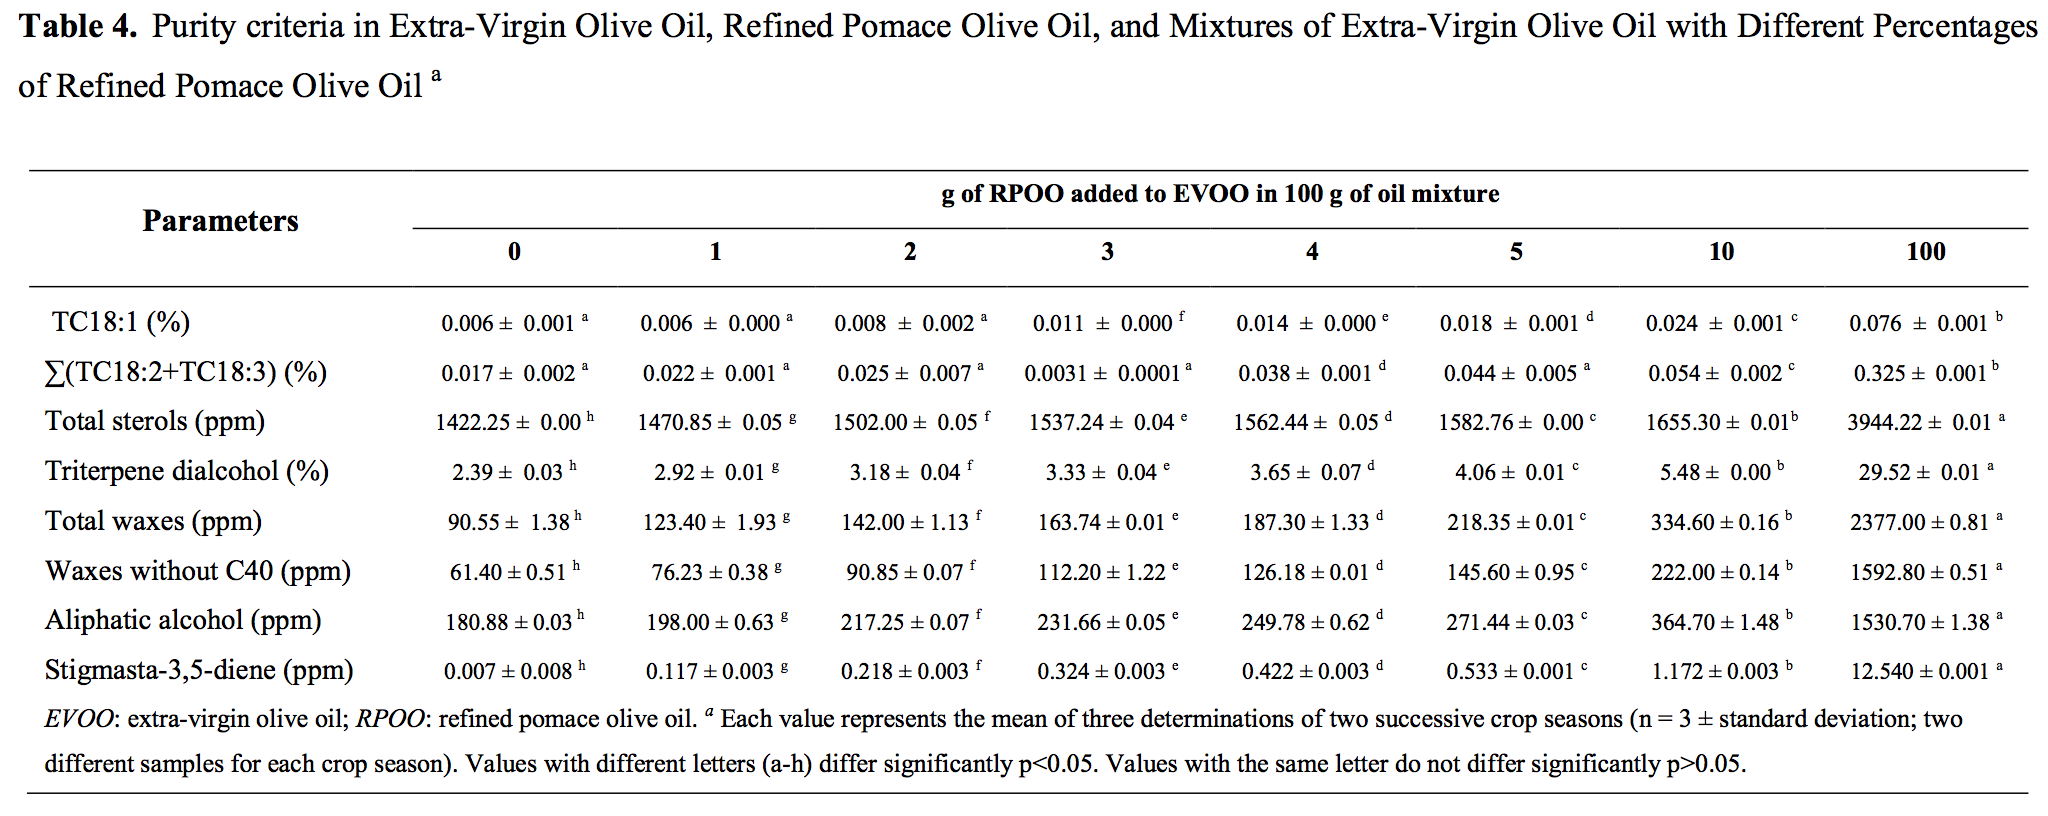 Olive Oil Comparison Chart